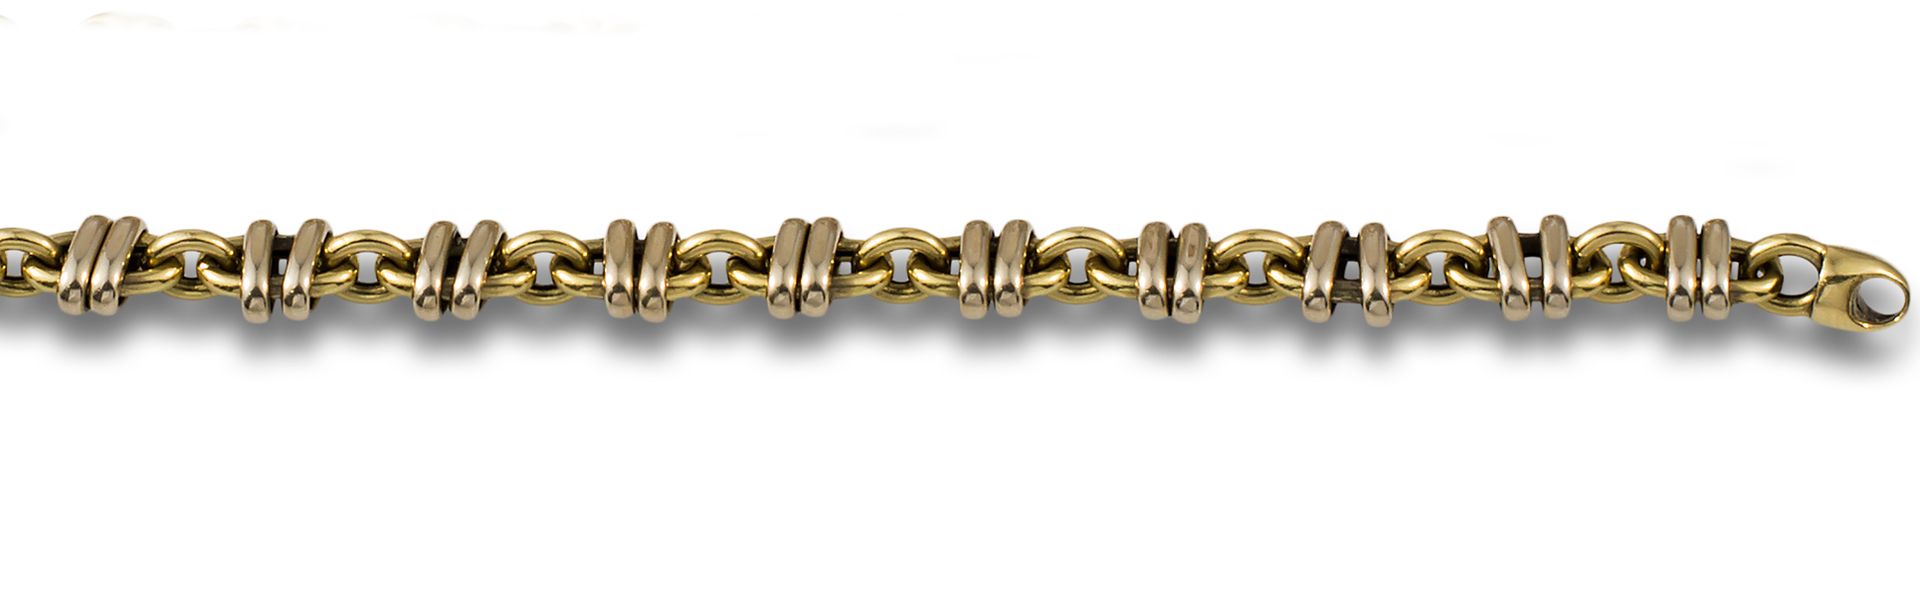 YELLOW GOLD BRACELET Bracelet, 80's, 18kt yellow gold interlocking links. Weight&hellip;